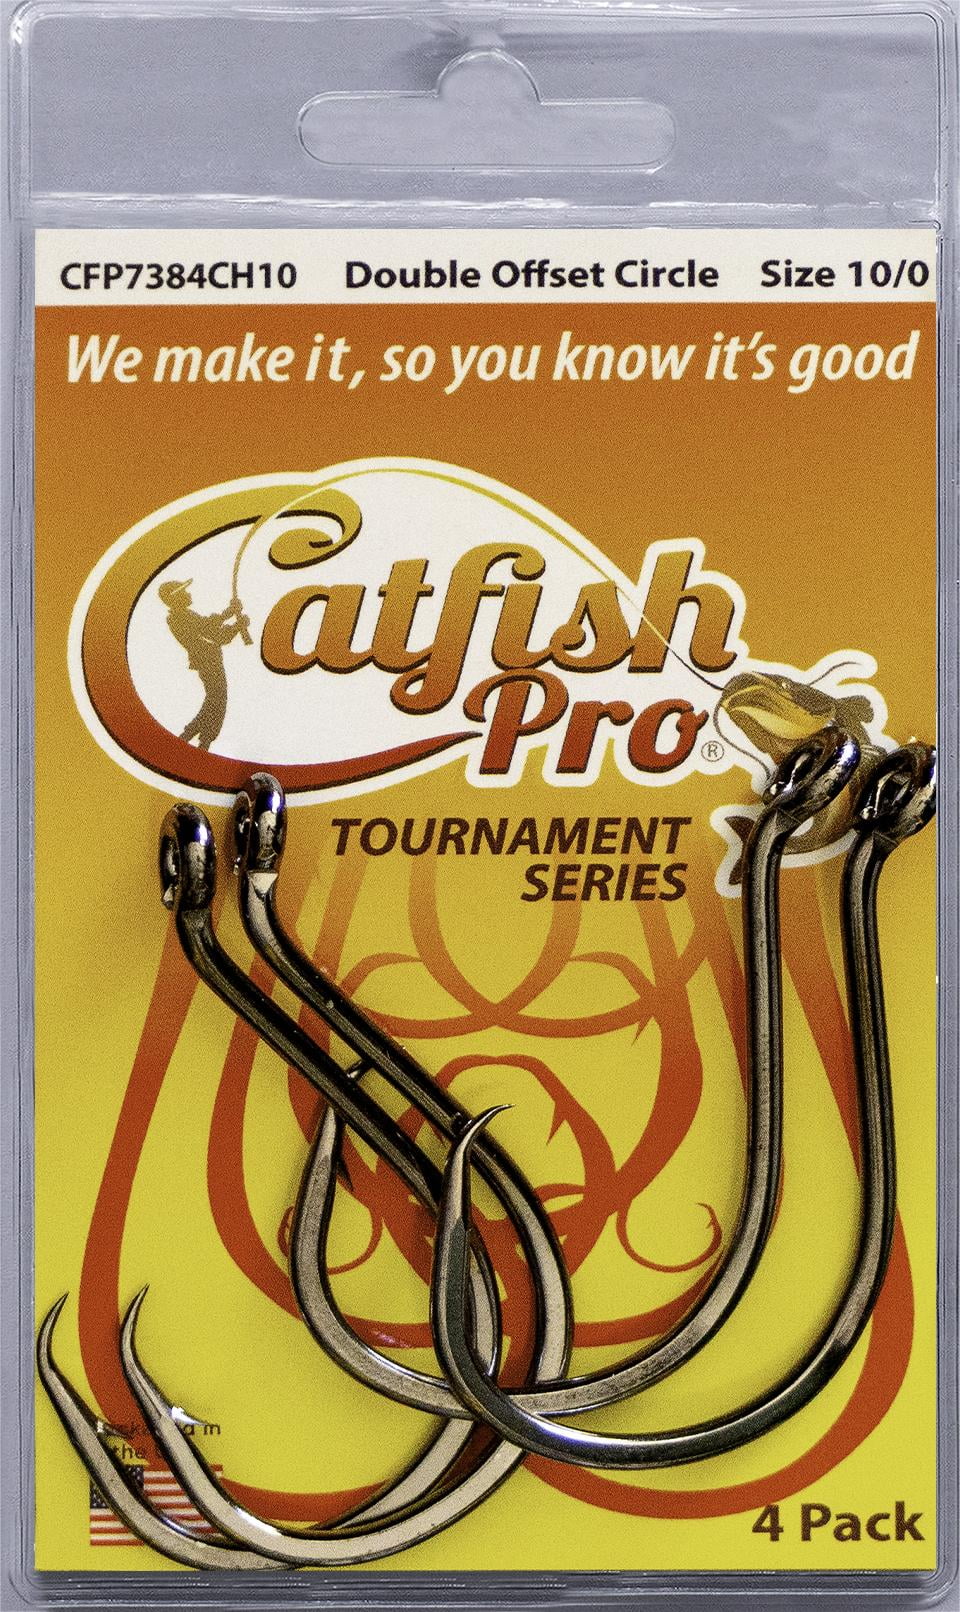 Catfish Pro Tournament Series Double Offset Circle Kuwait